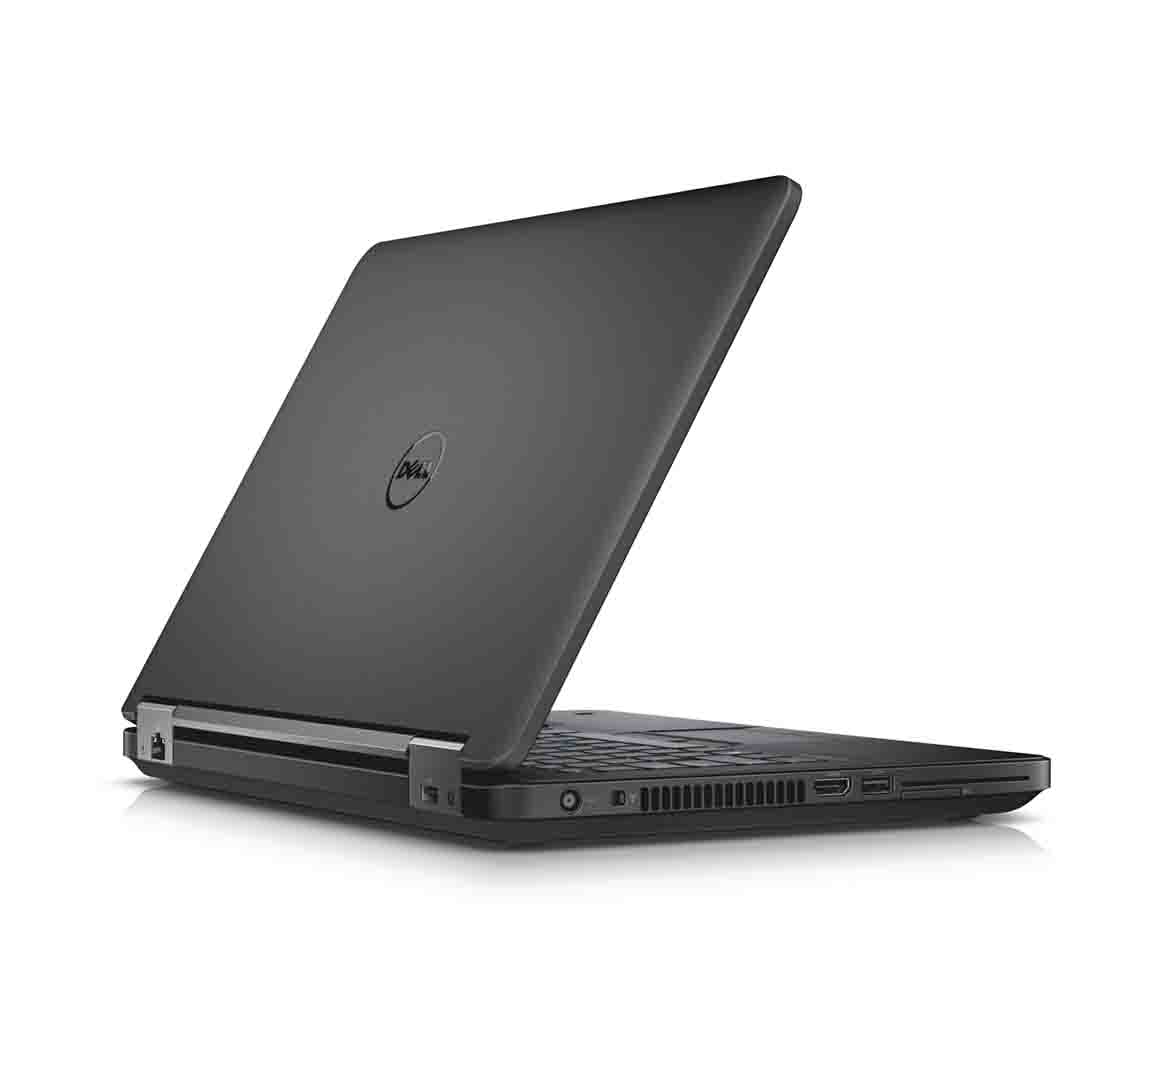 Dell Latitude 5440 Business Laptop, Intel Core i5-4th Generation CPU, 4GB RAM, 500GB HDD, 14 Inch Display, Windows 10 Pro, Refurbished Laptop